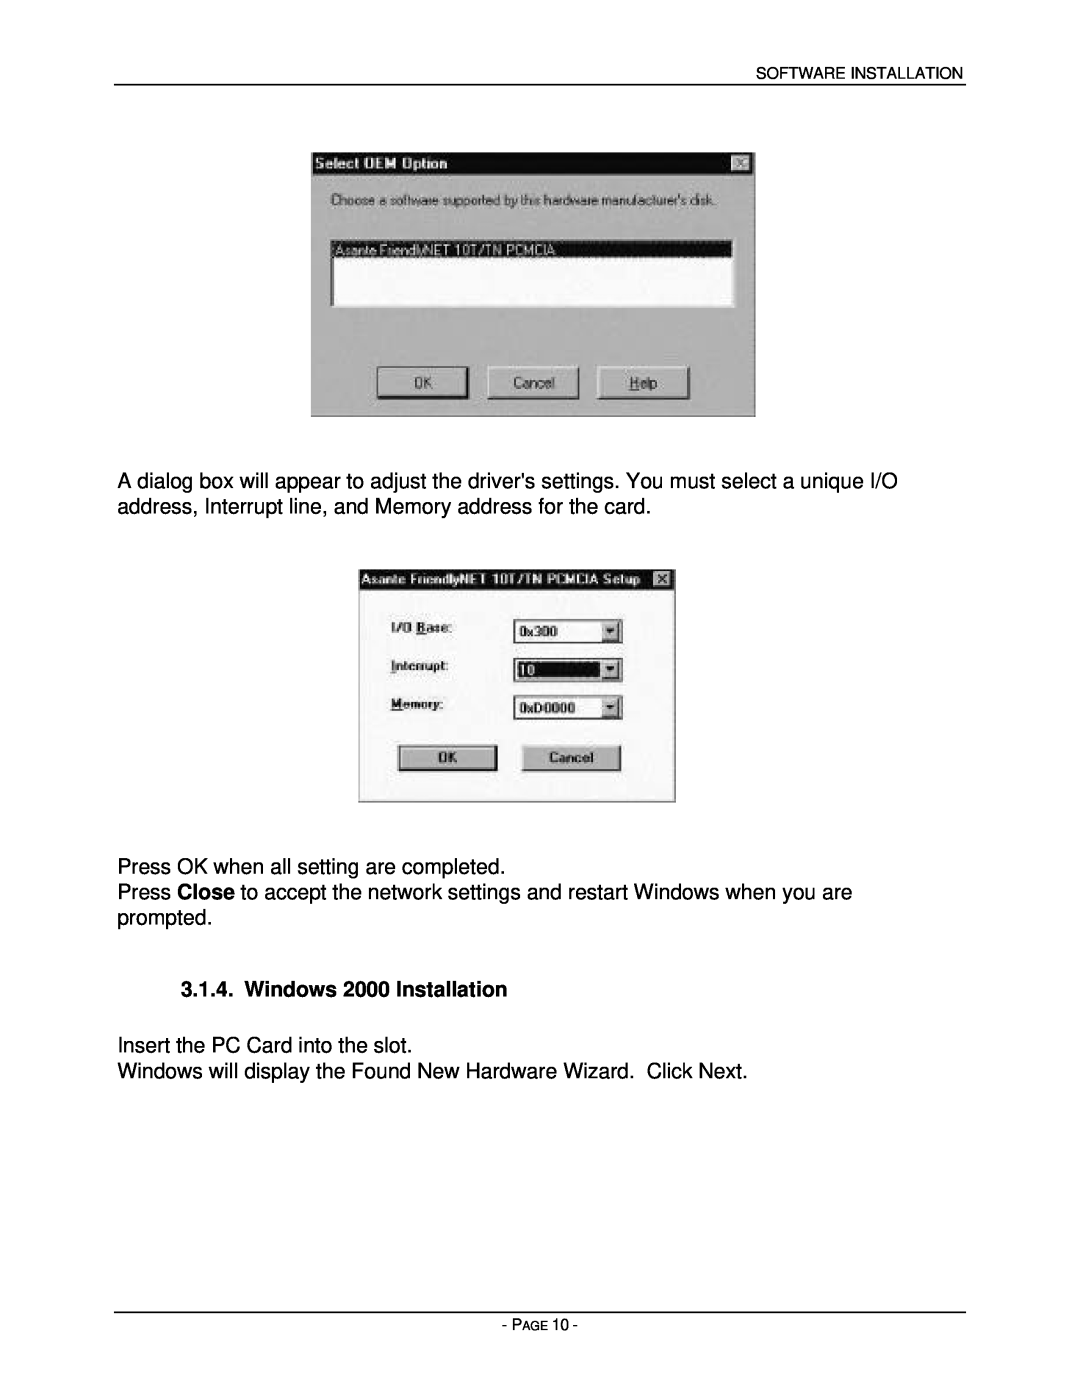 Asante Technologies PCMCIA user manual Windows 2000 Installation 